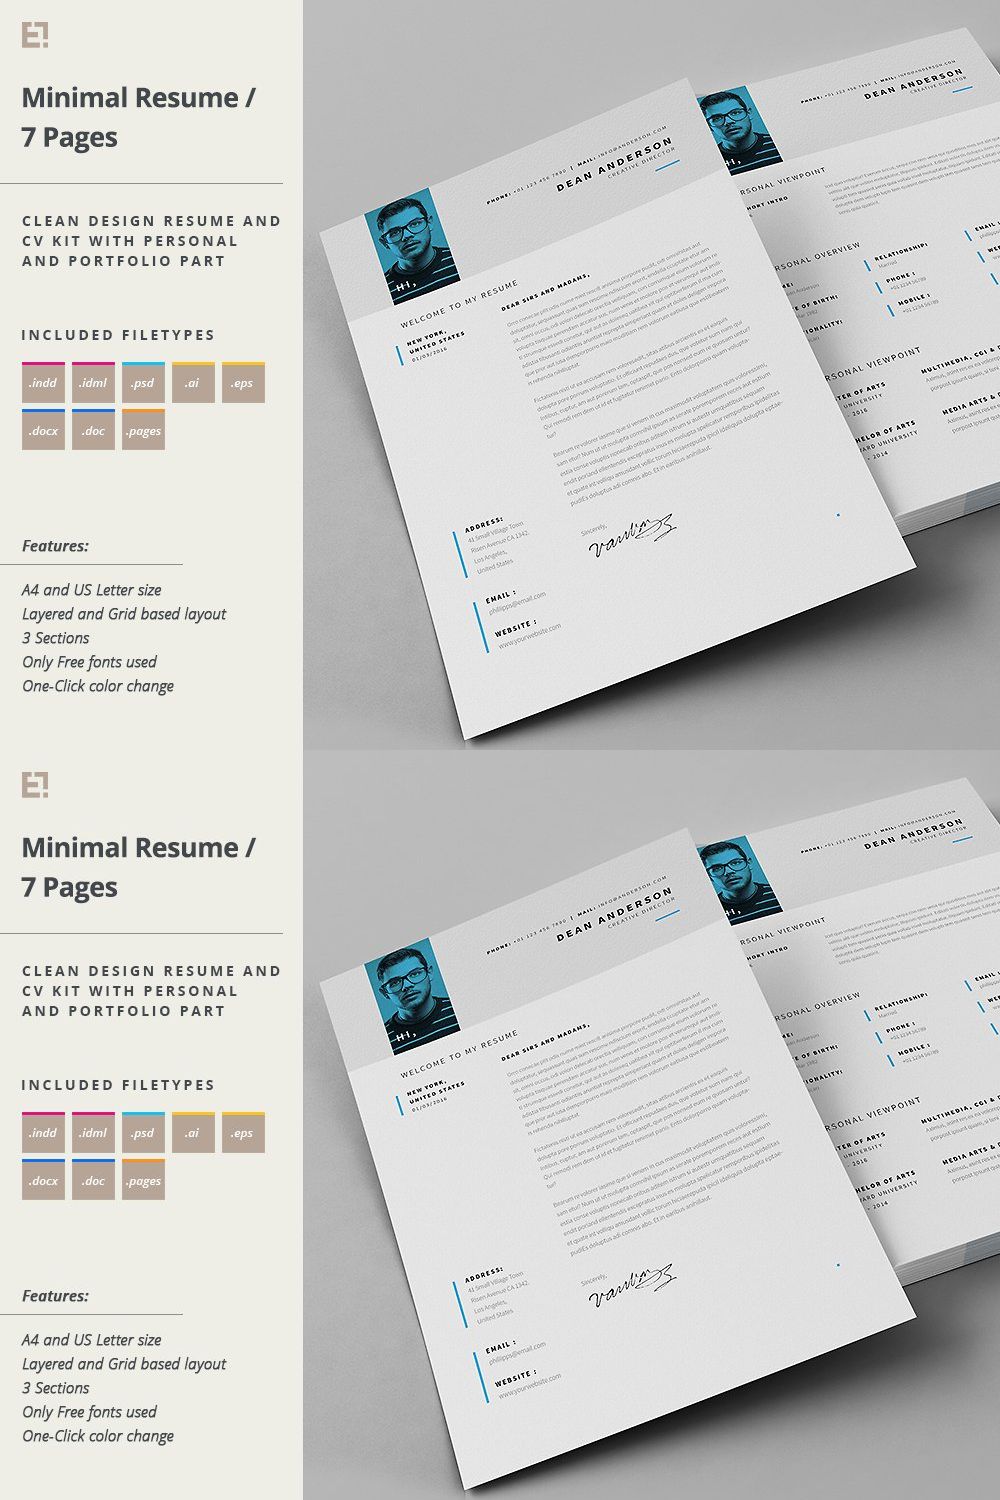 Resume - Portfolio - Letter pinterest preview image.